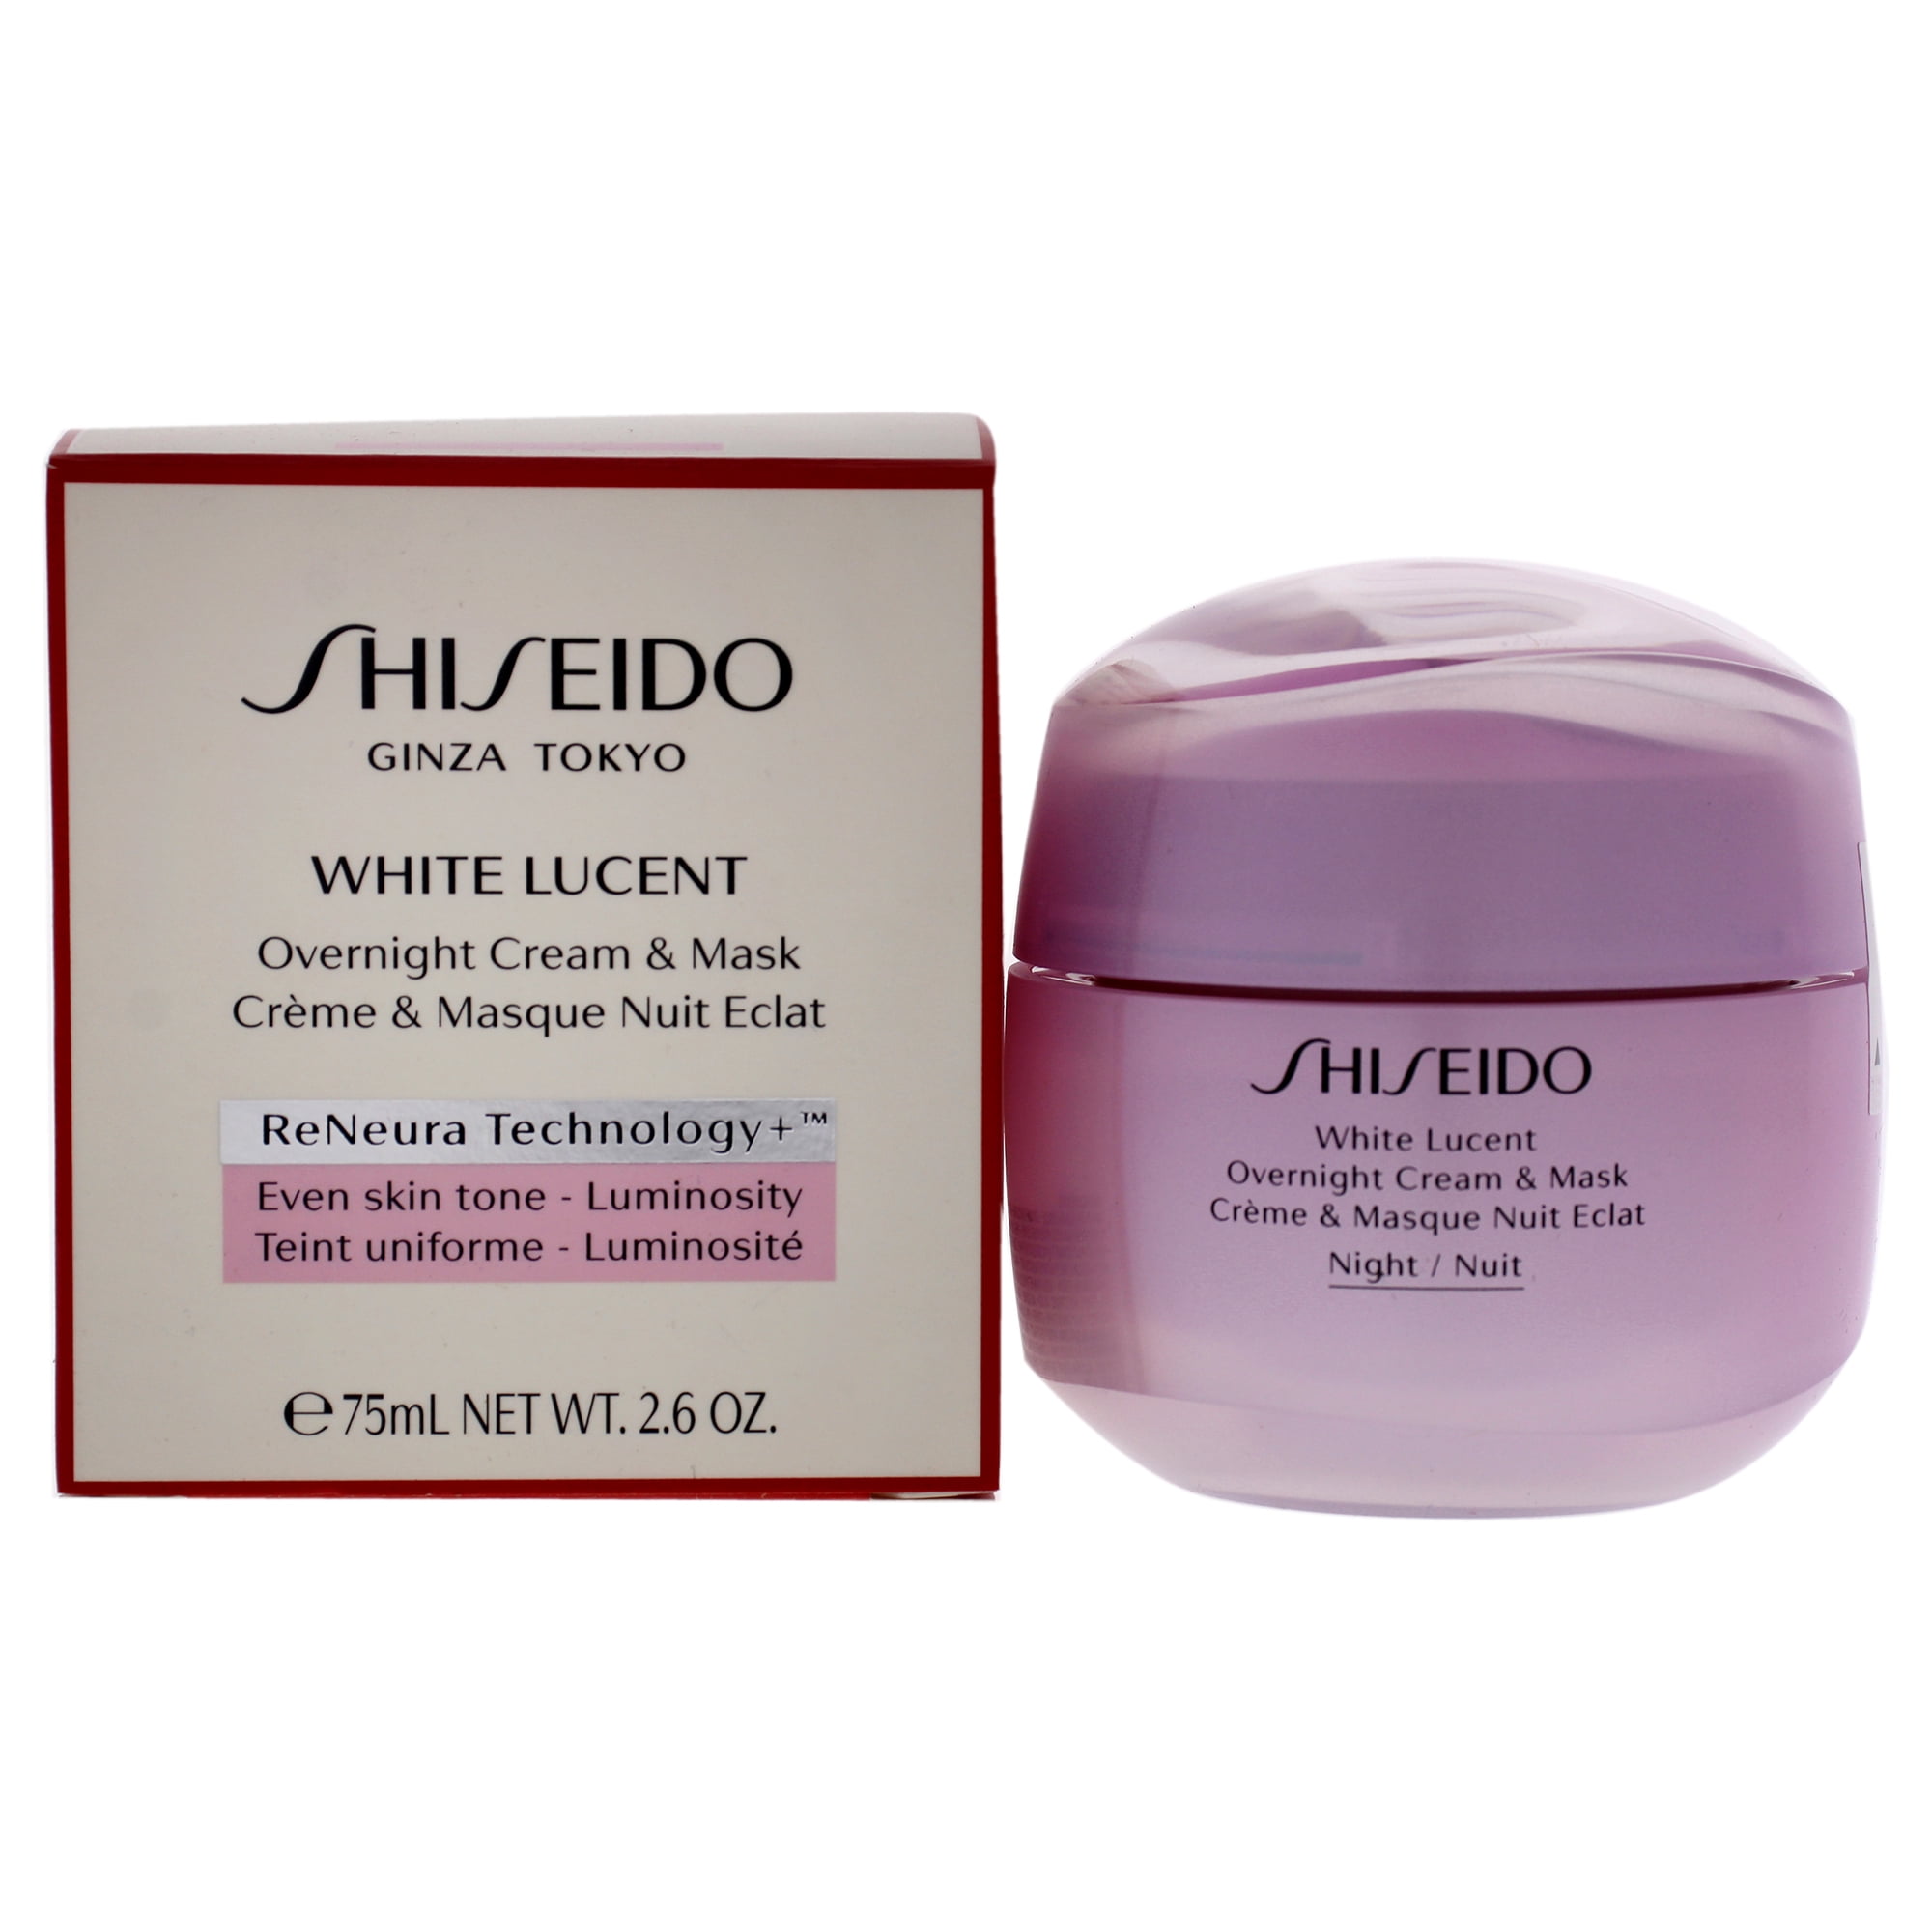 gift fossil Meander Shiseido Ginza Tokyo White Lucent Overnight Cream & Face Mask 2.6oz/75ml -  Walmart.com